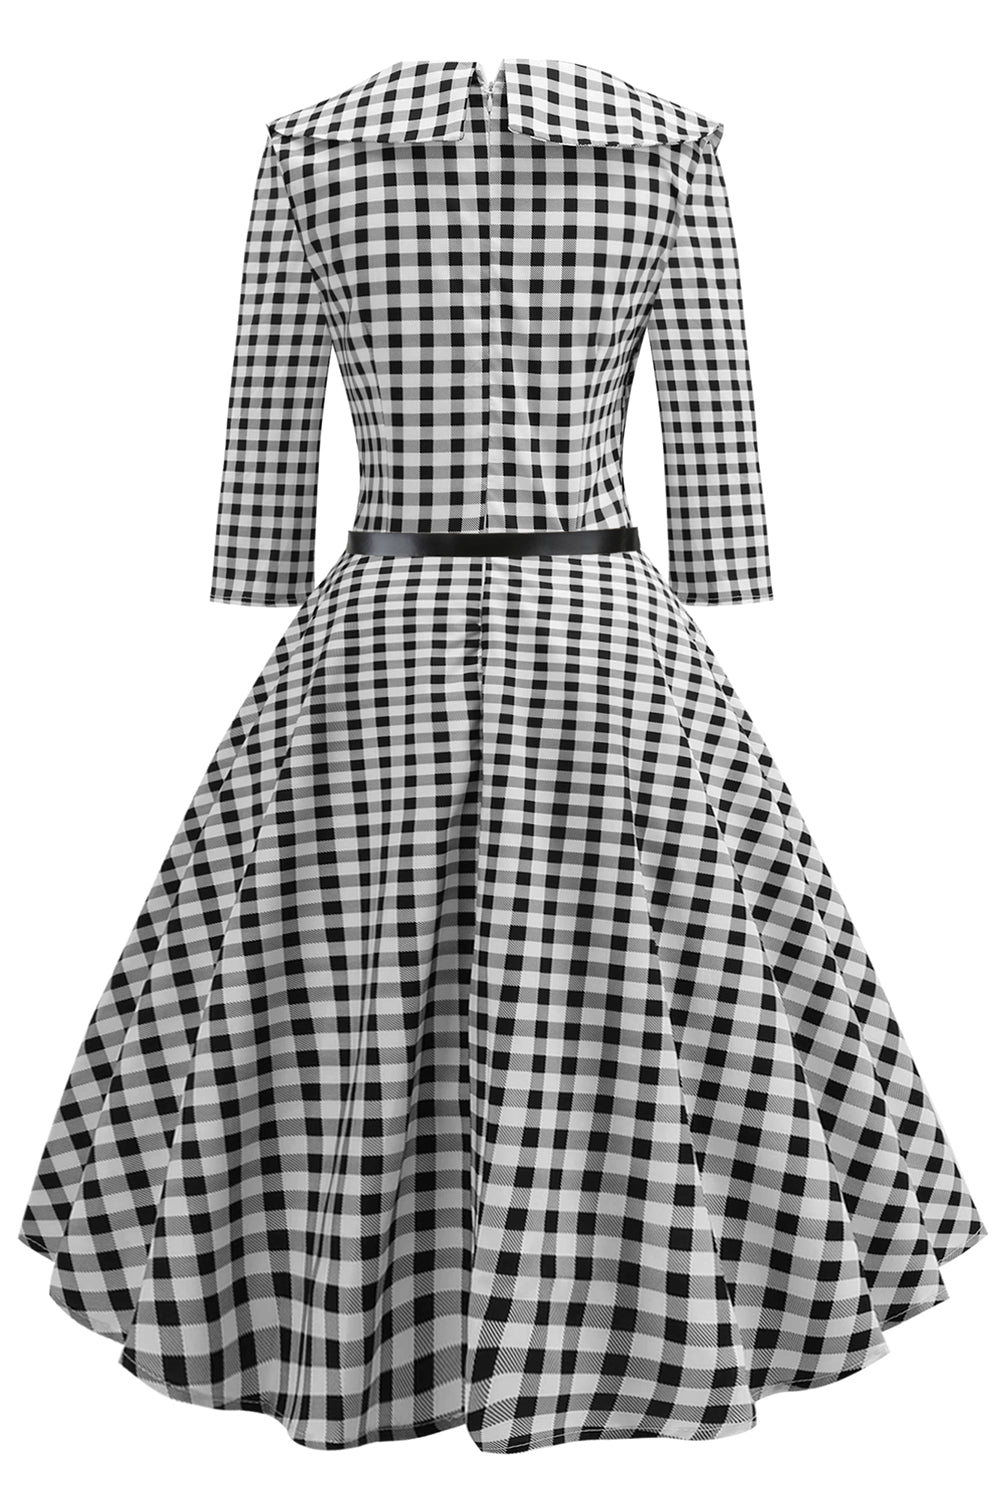 Plaid Printed Stitching Vintage Dress